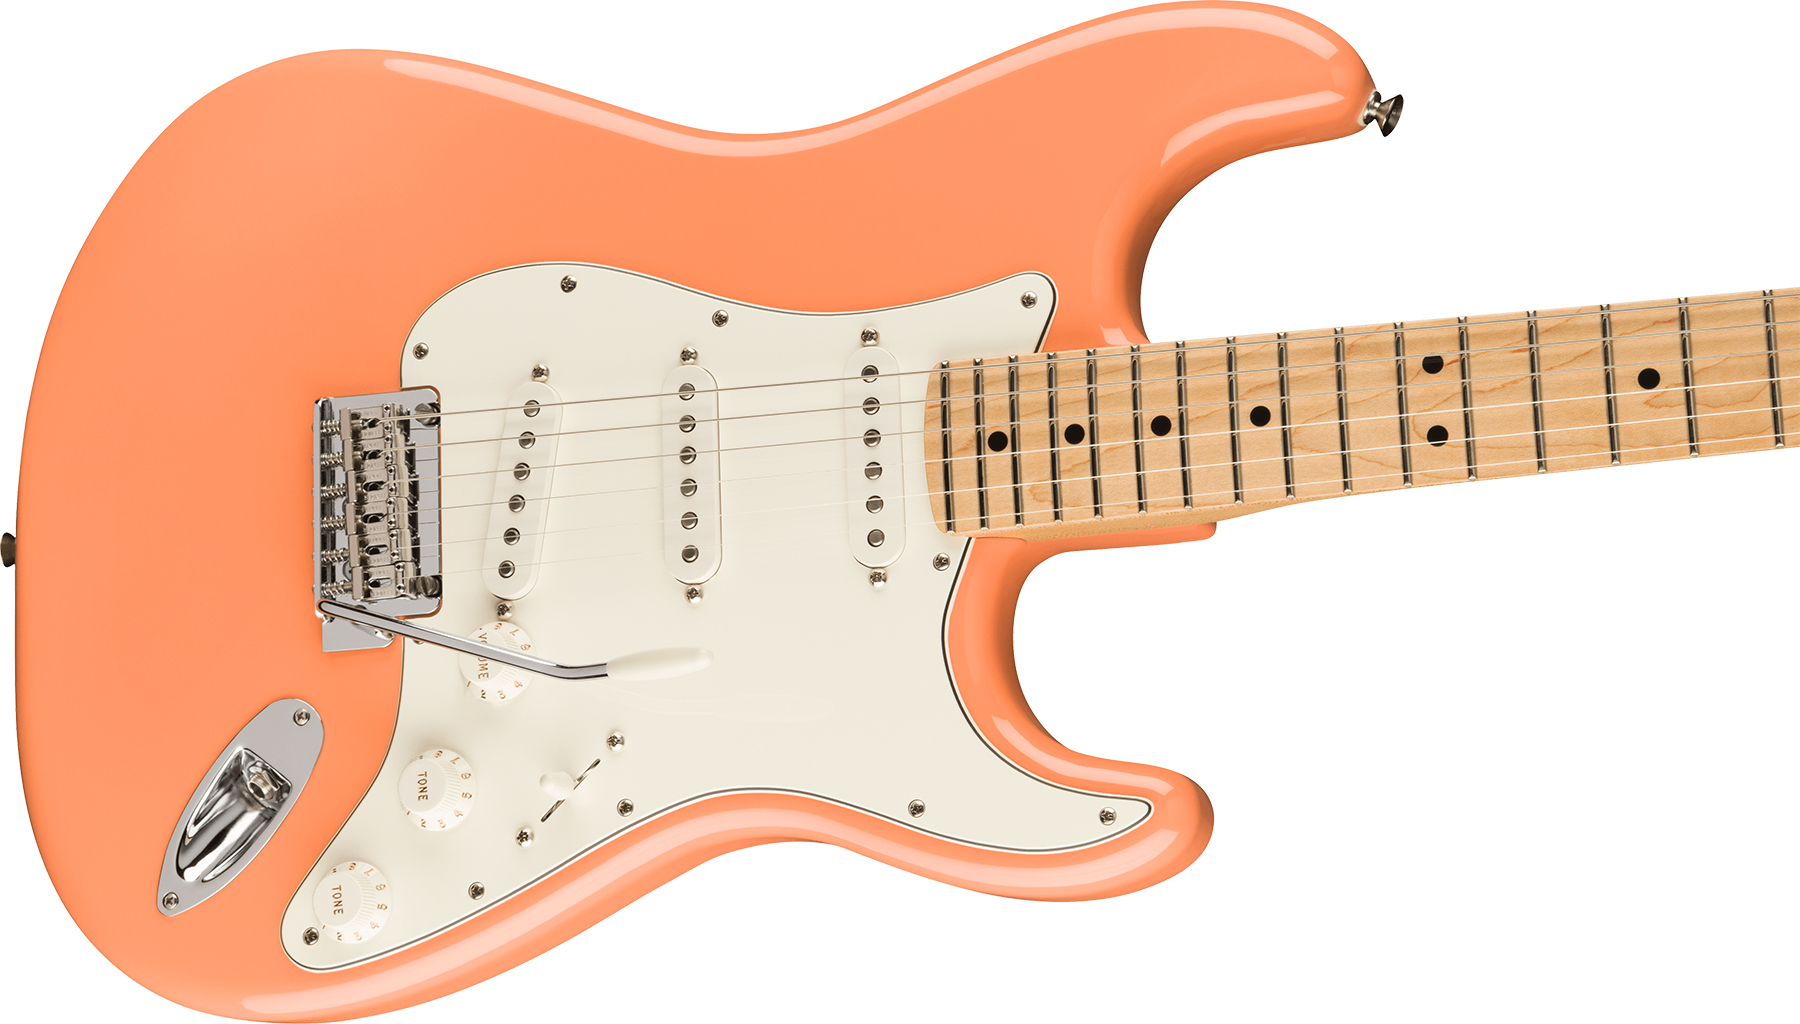 Fender Strat Player Ltd Mex 3s Trem Mn - Pacific Peach - Str shape electric guitar - Variation 2